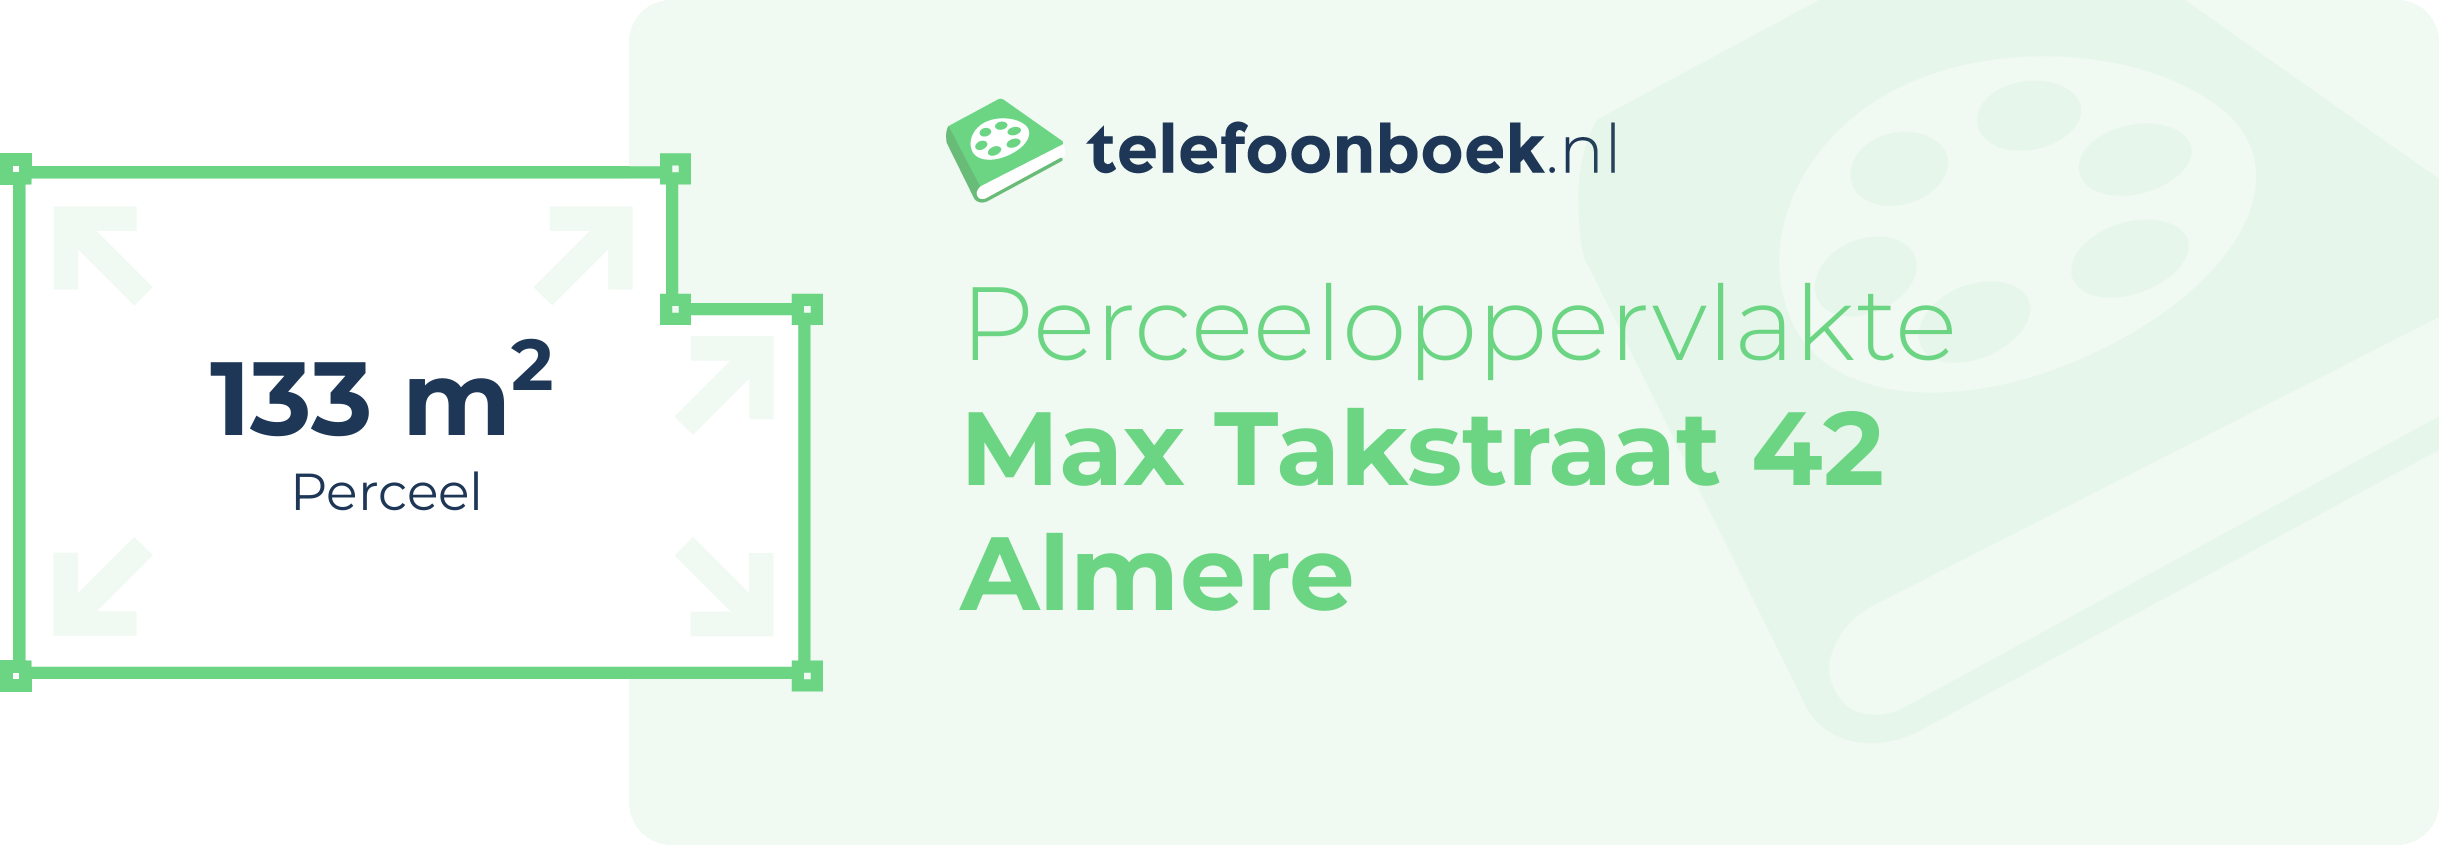 Perceeloppervlakte Max Takstraat 42 Almere